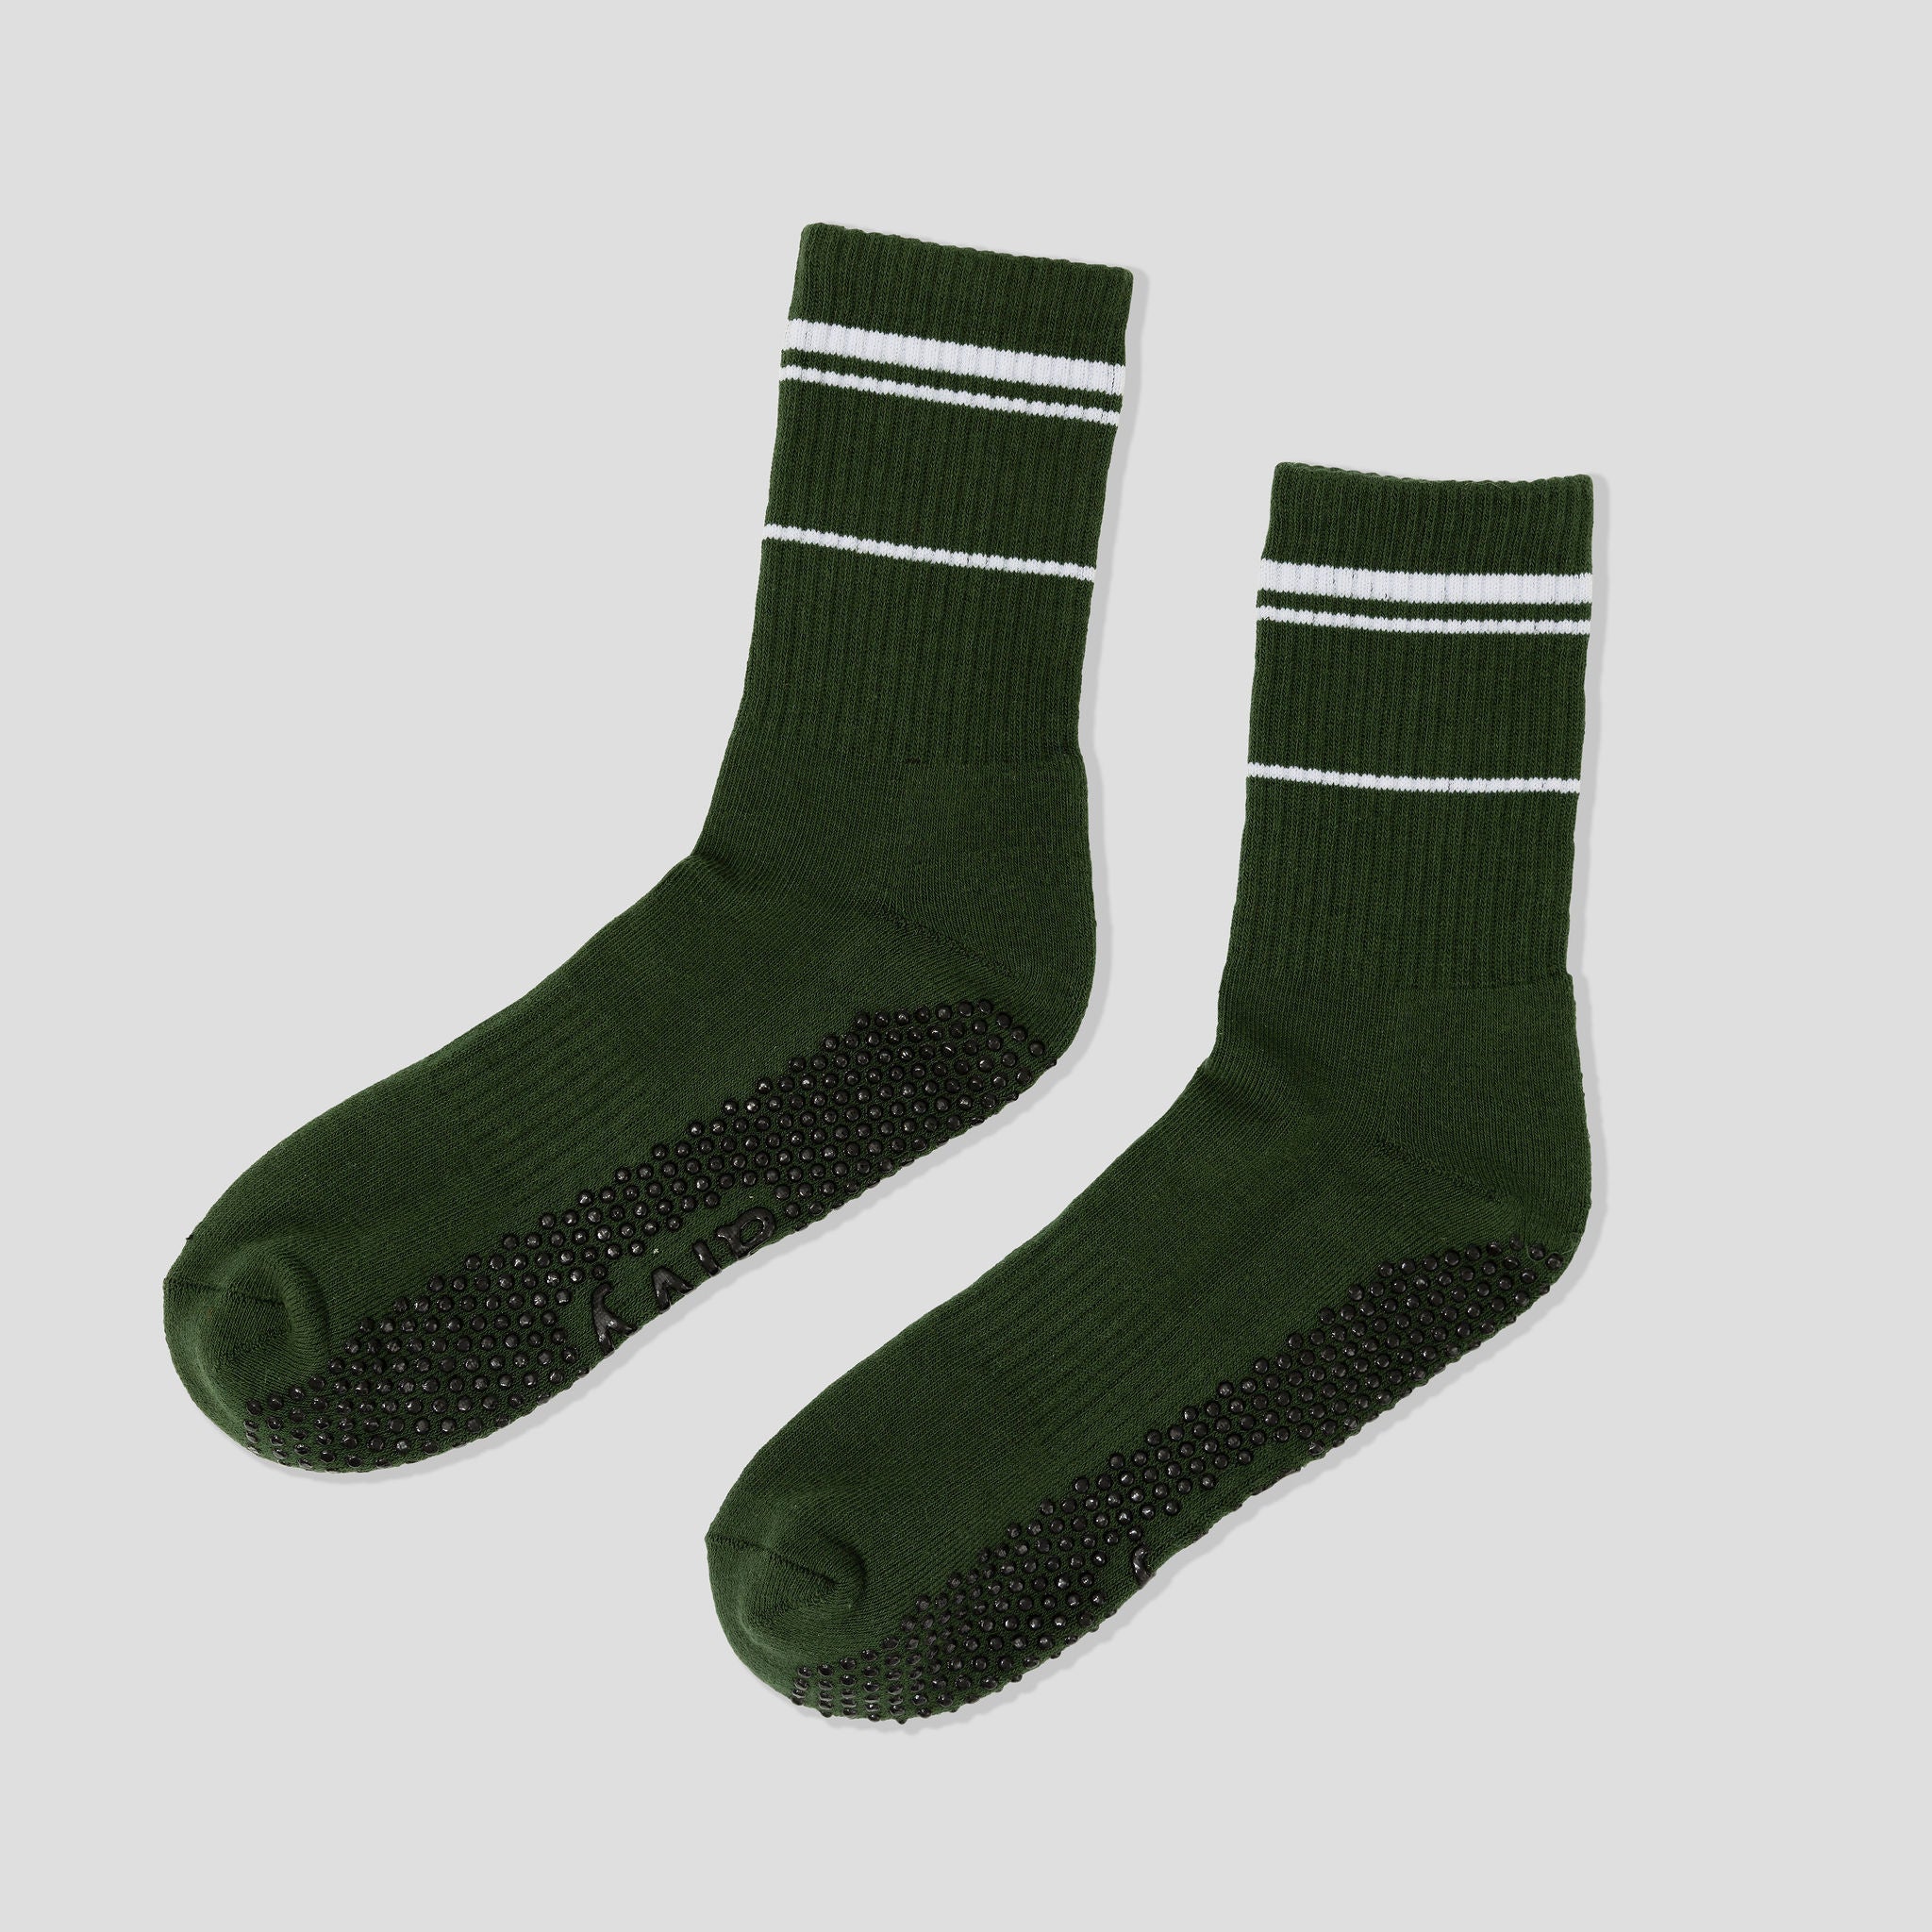 Alvy crew forest green grip socks